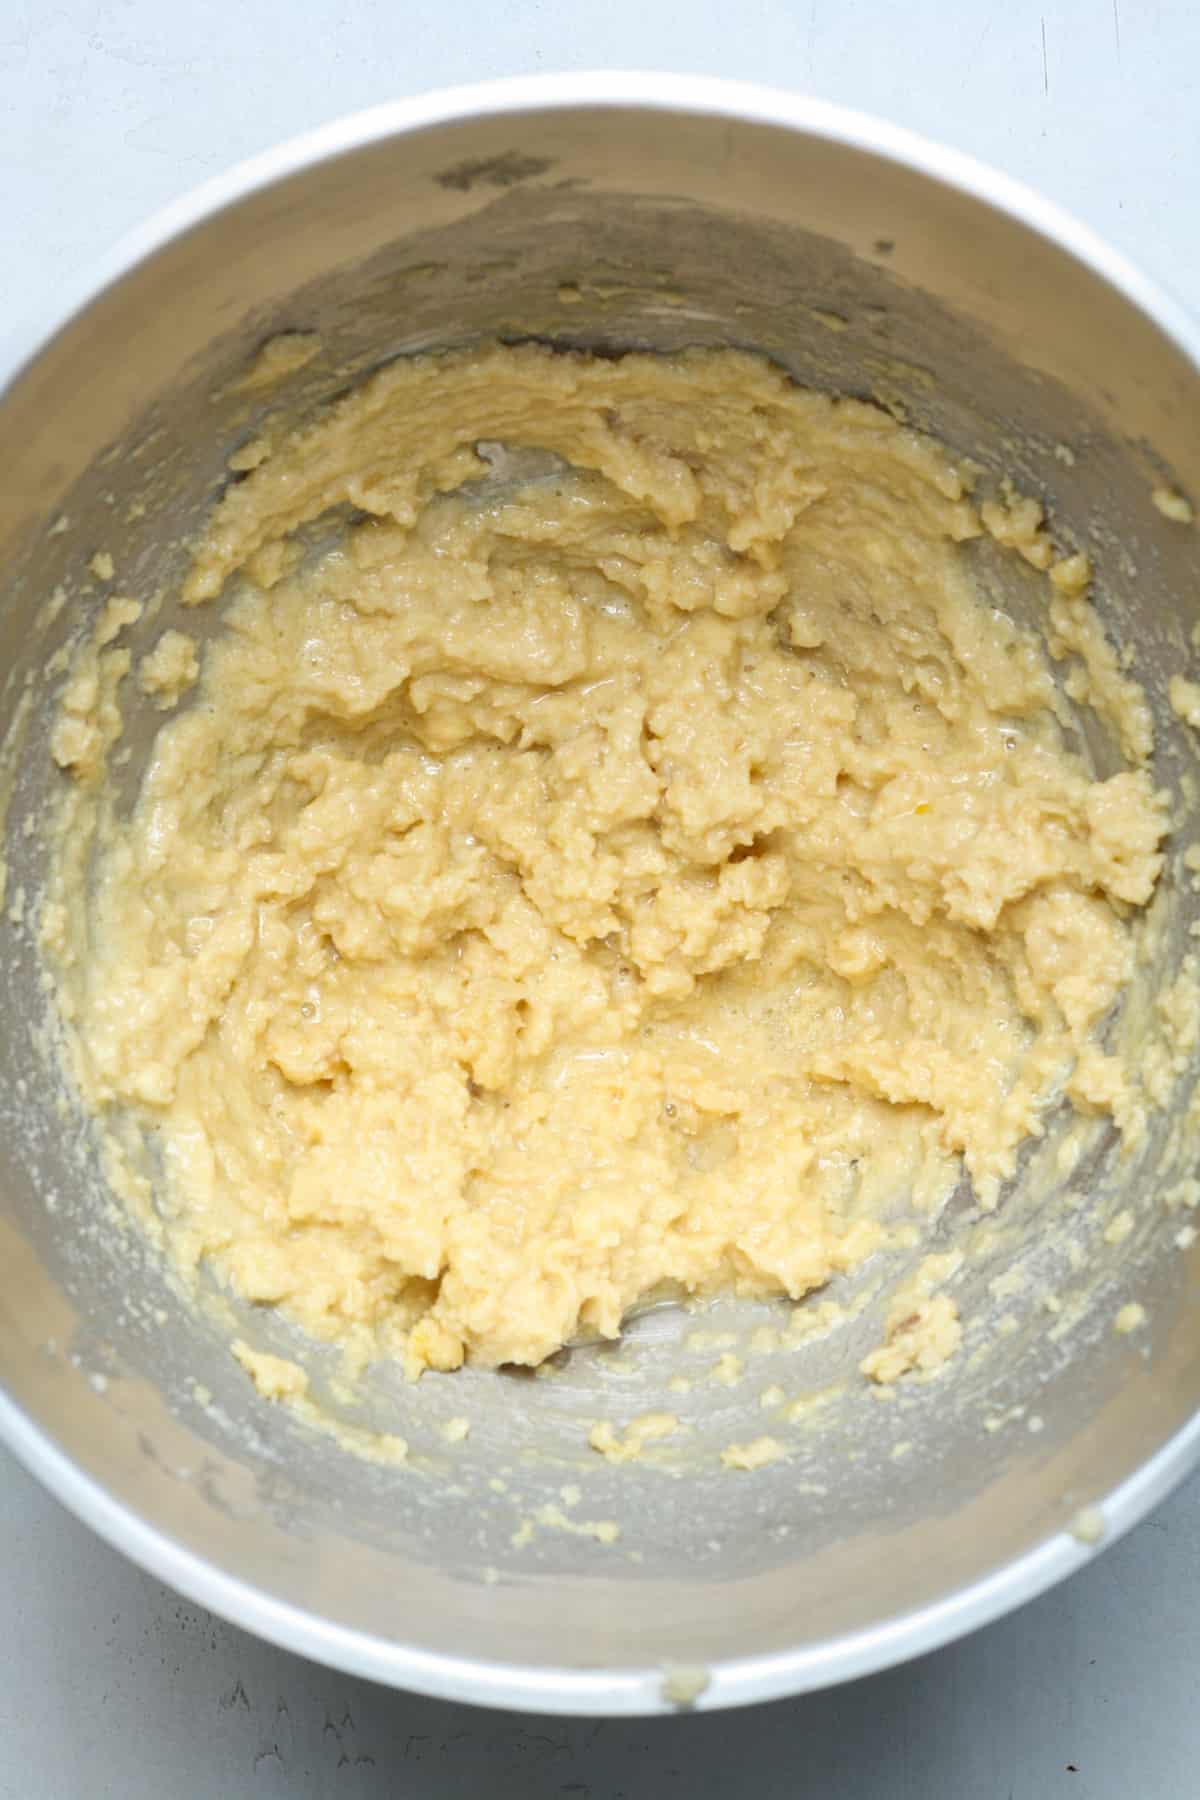 Creamy dough in mixing bowl